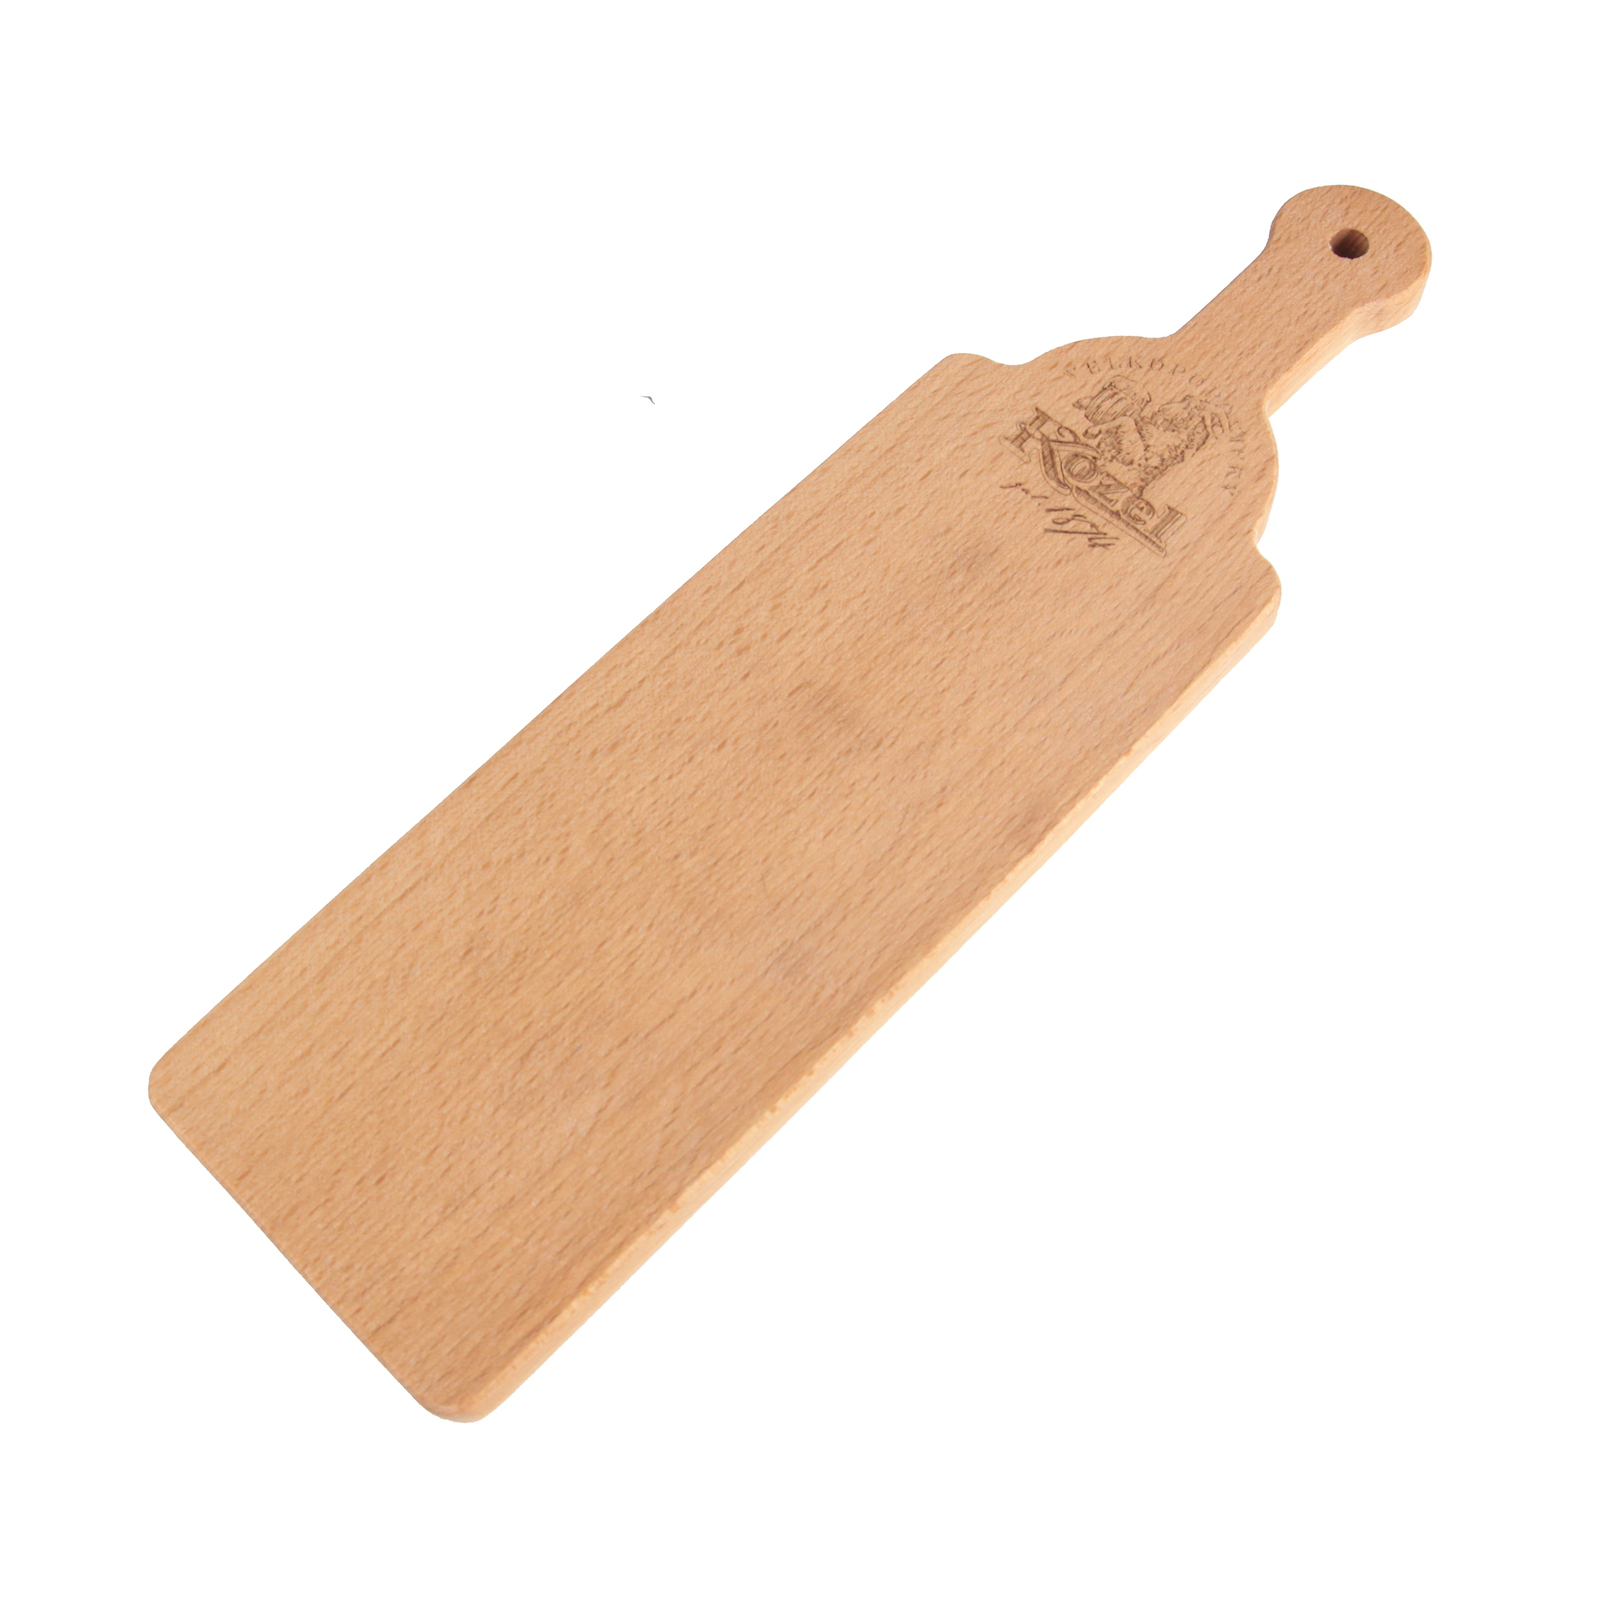 Kozel wooden board for salami